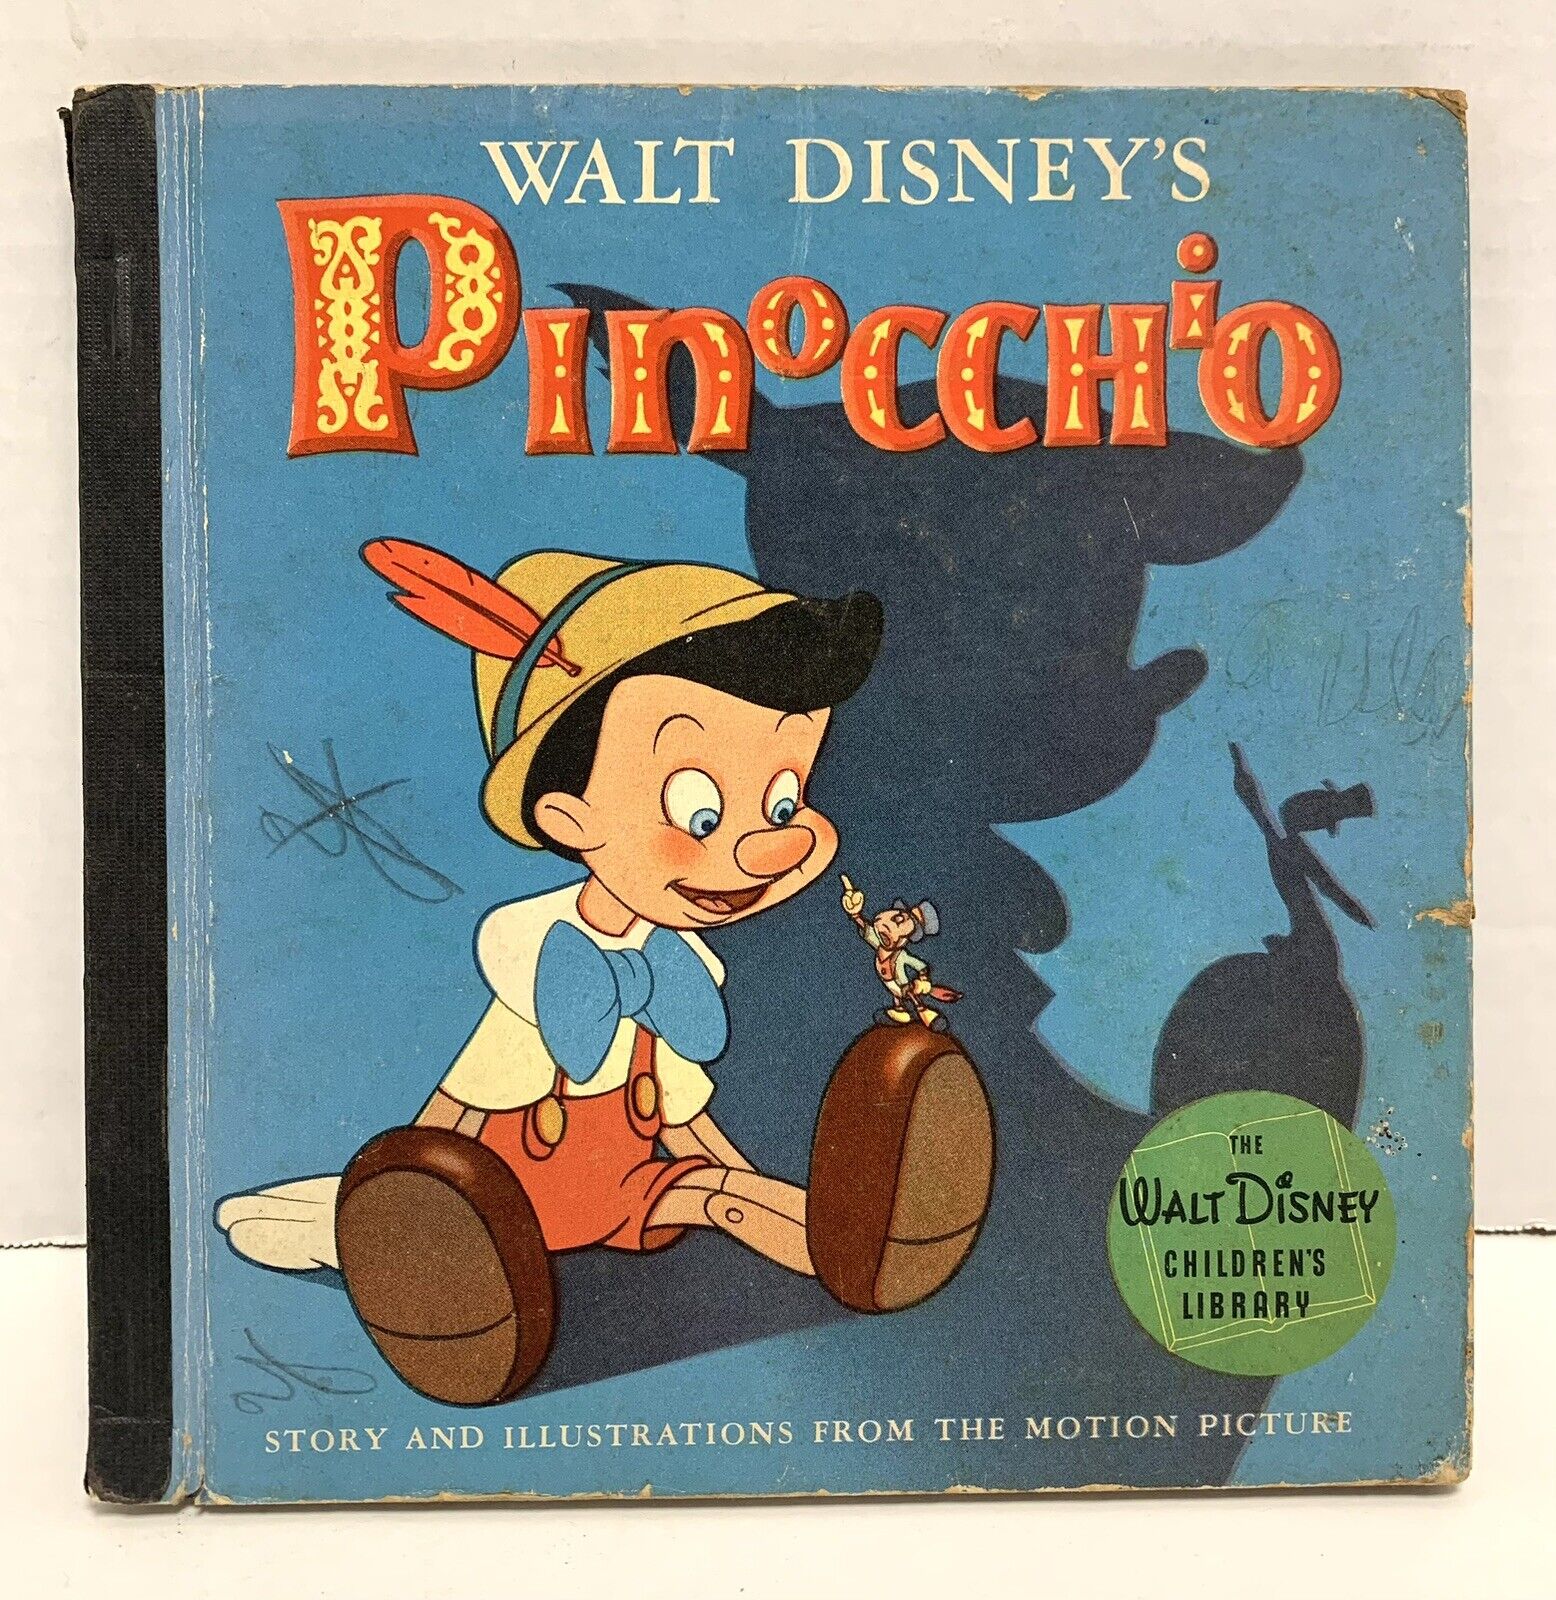 VTG (1939/1940) Walt Disney’s Pinocchio Hardcover Book Children's Library Poor